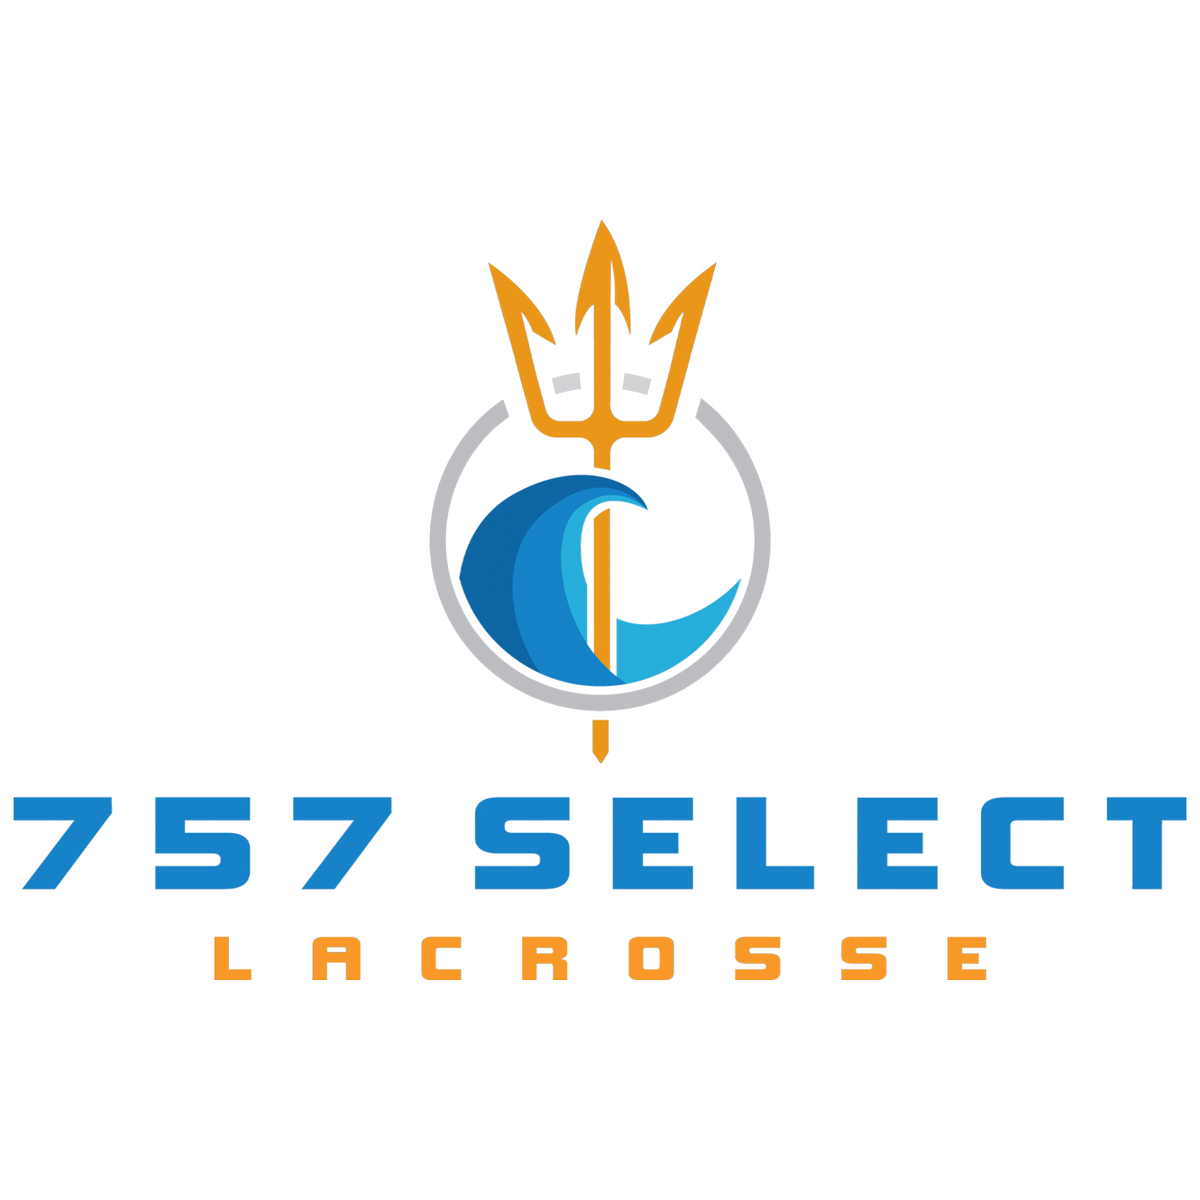 757 Lacrosse Team Store